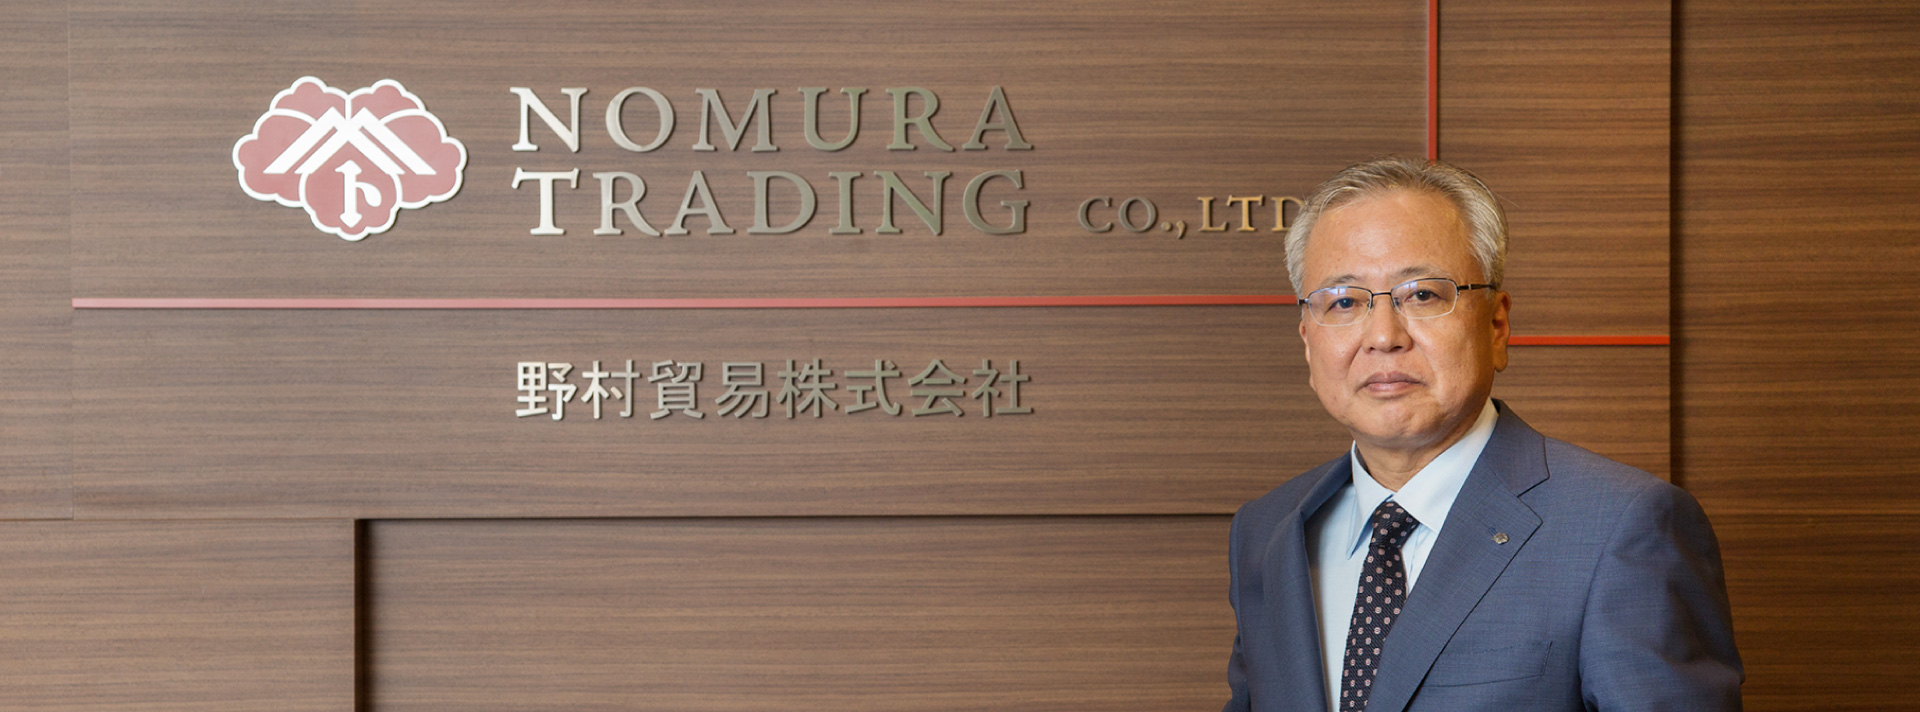 Nomura Trading